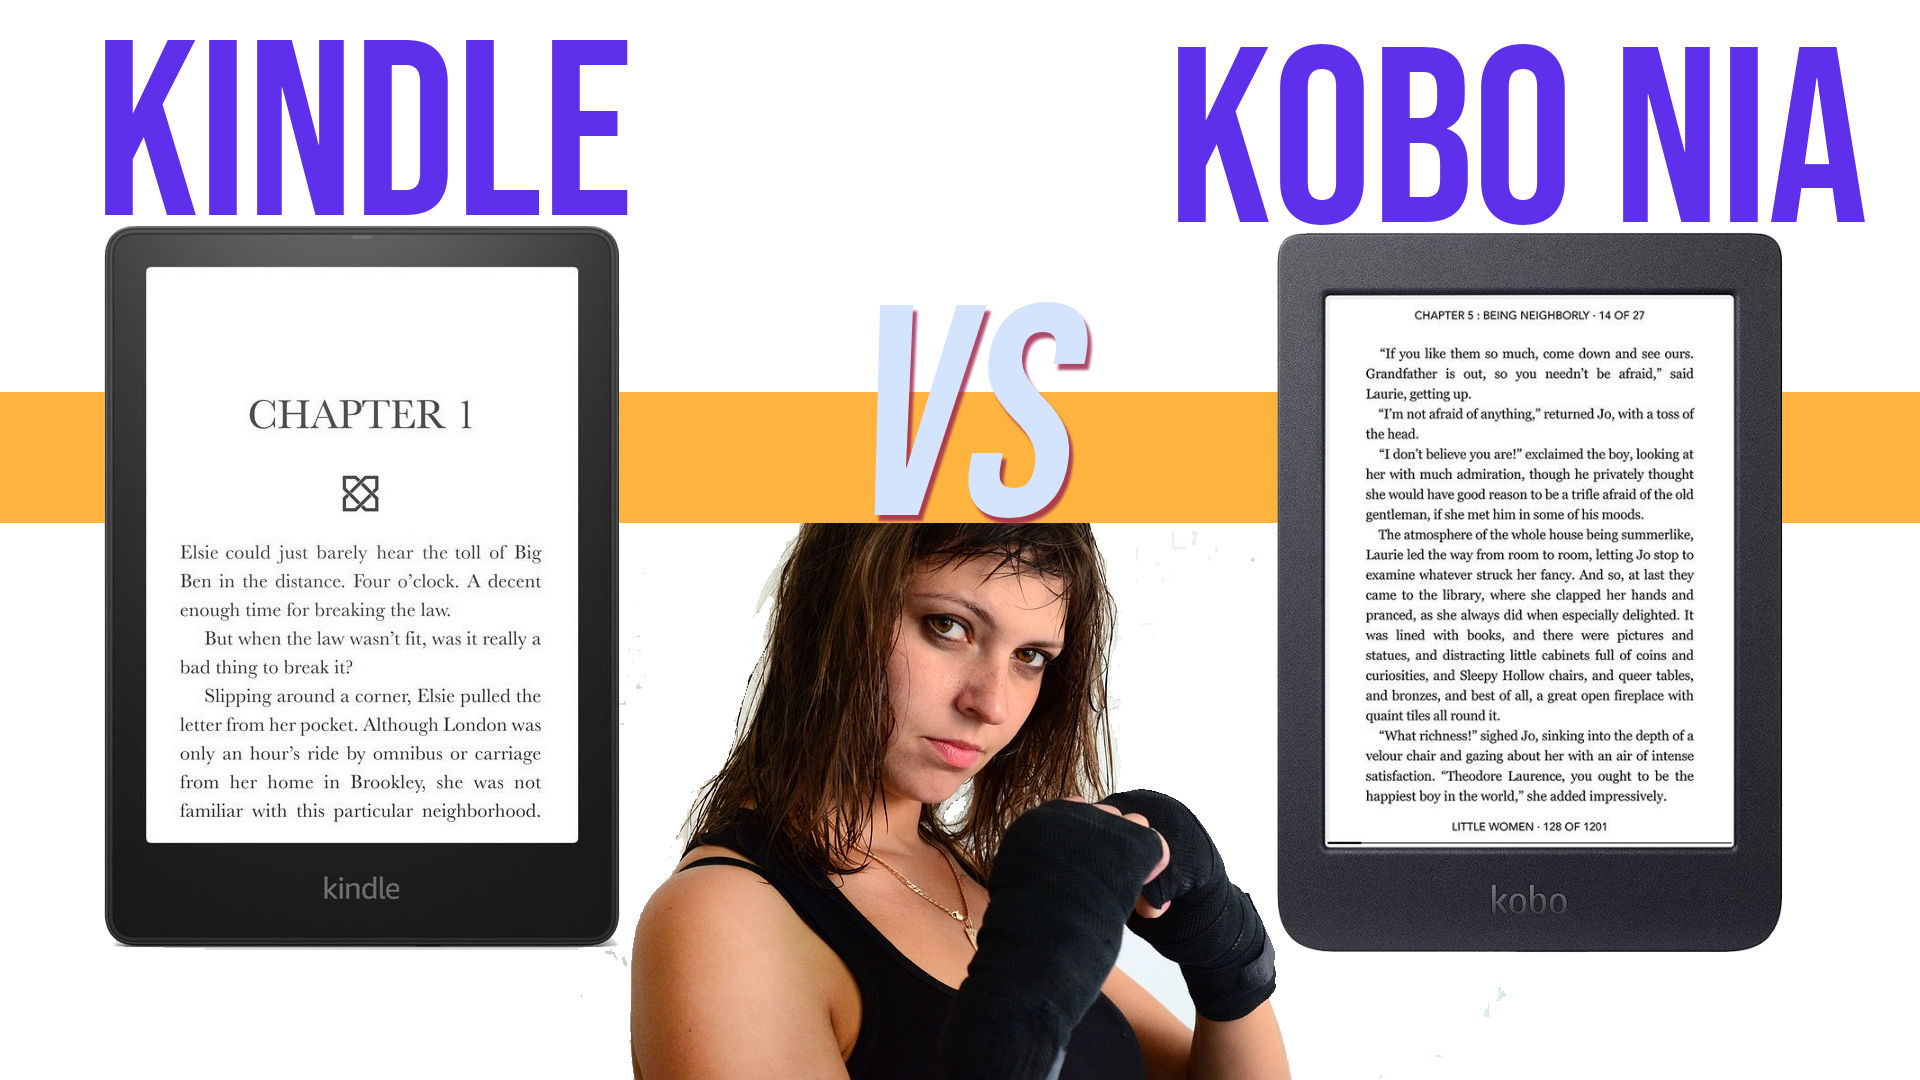 Kindle vs kobo nia e-reader comparison